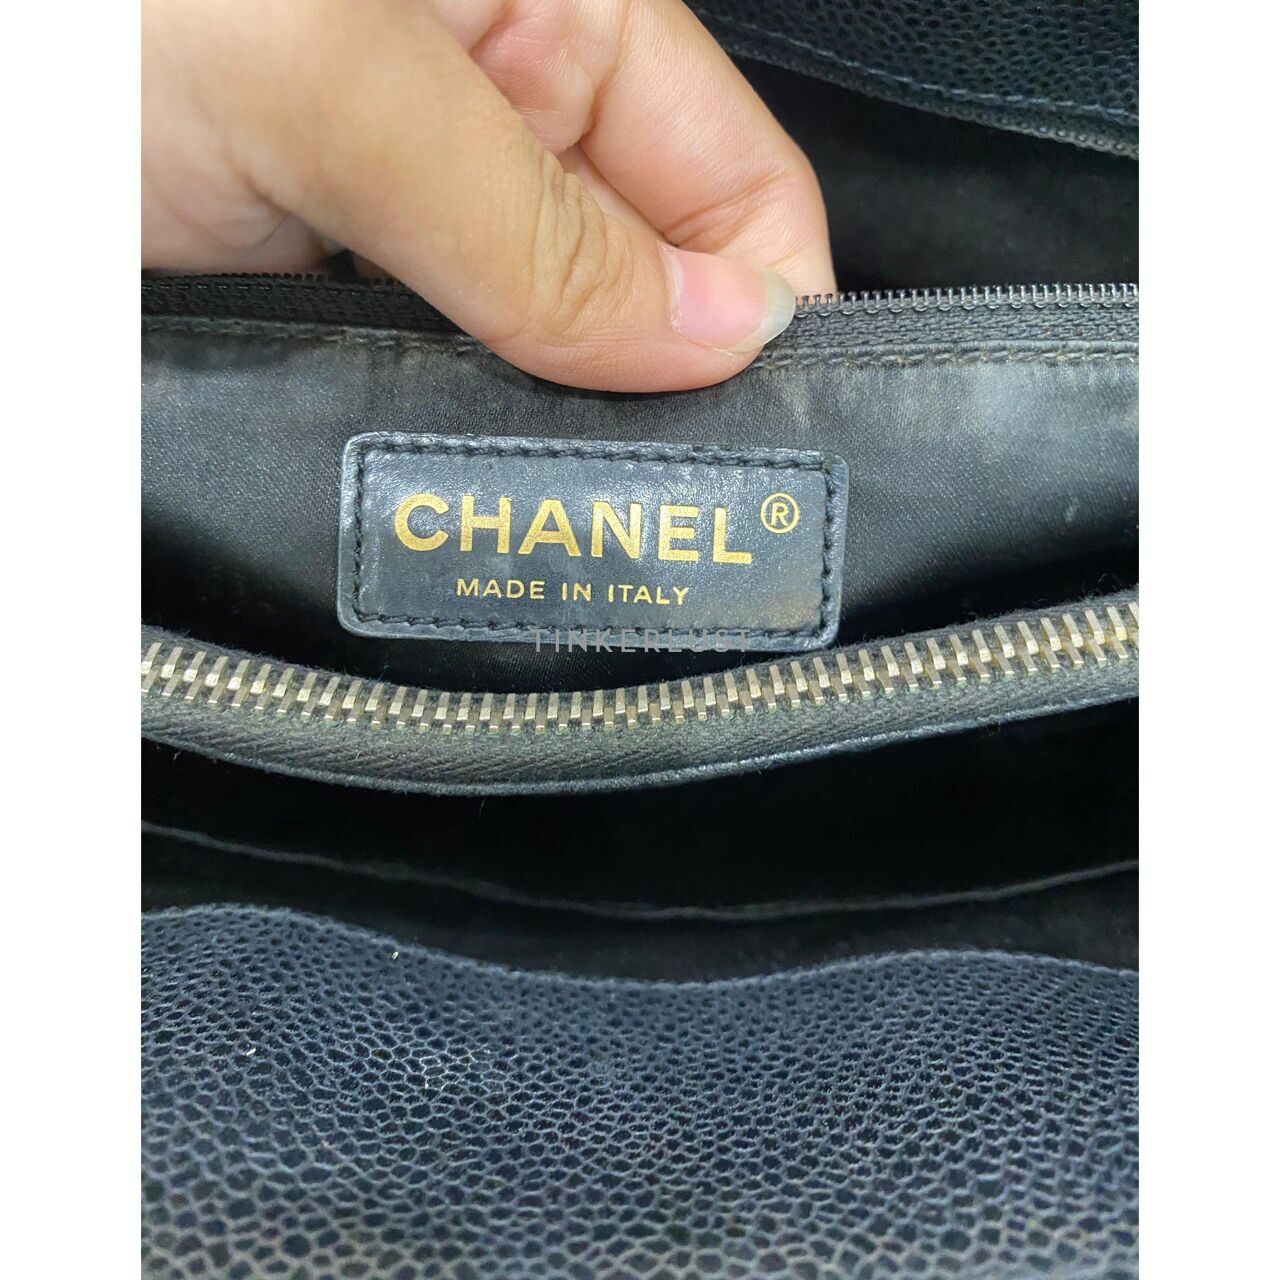 Chanel GST Black GHW #14 Tote Bag